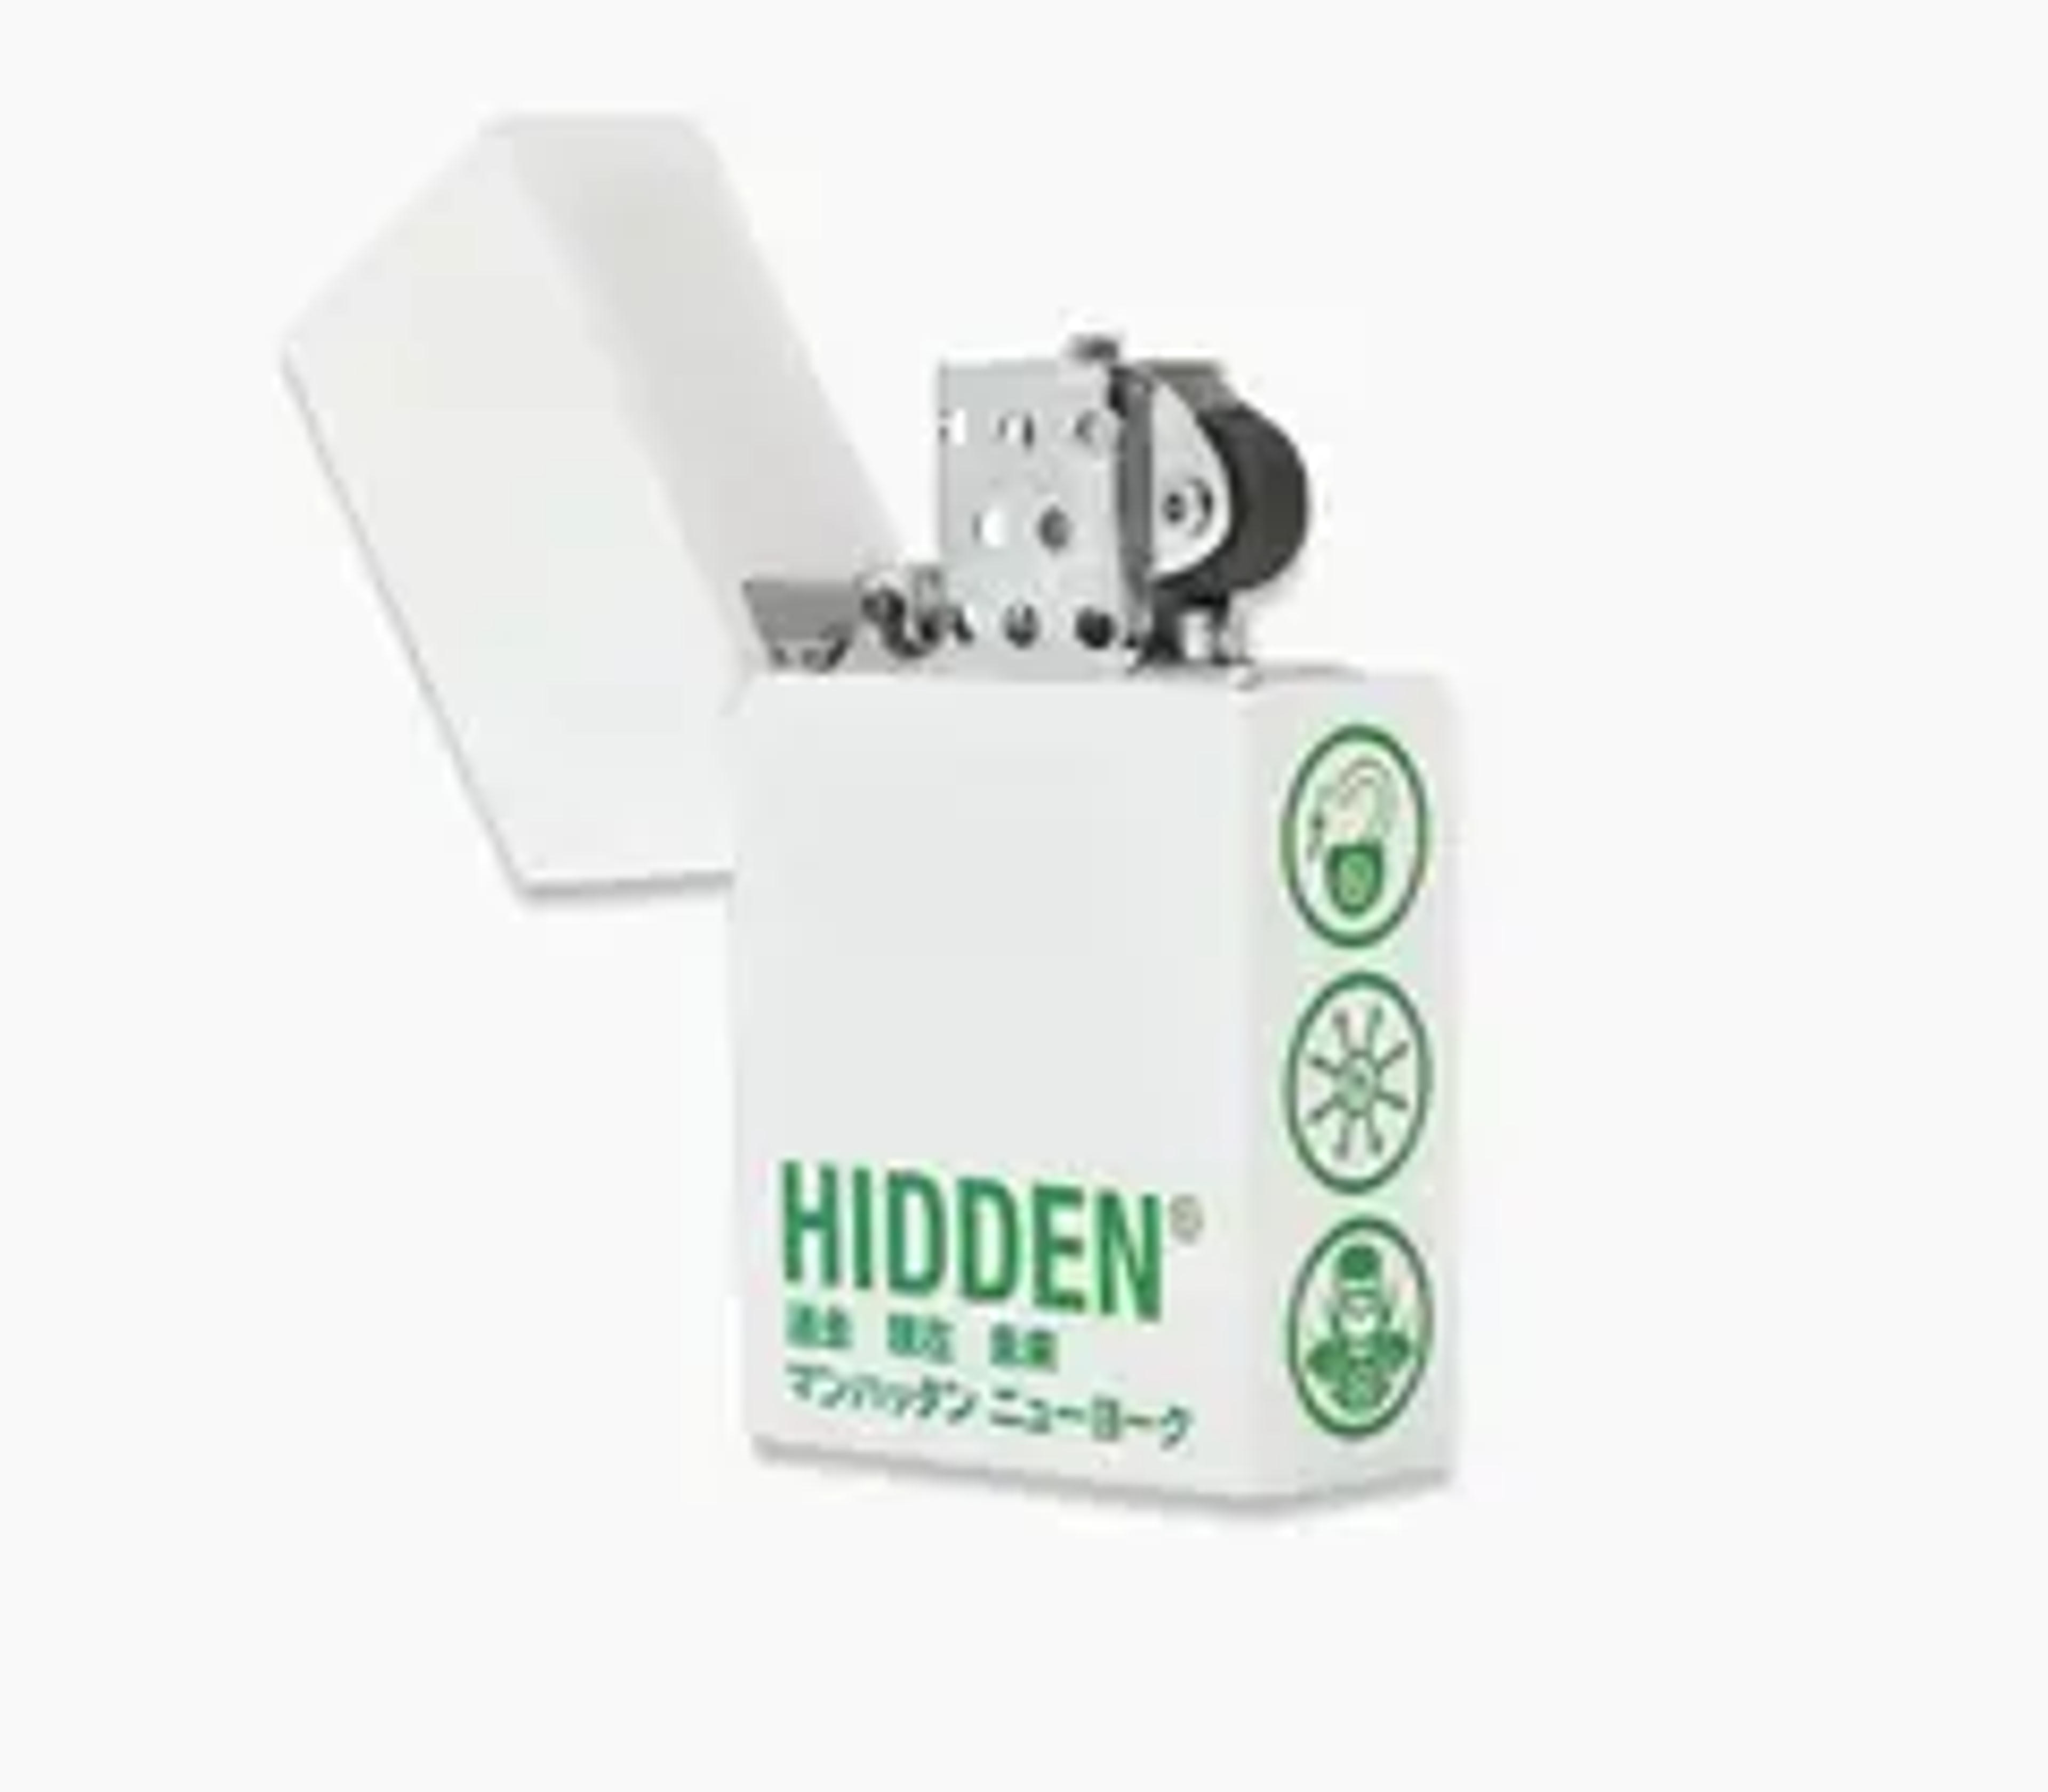 HIDDEN Hidden Tsubota Lighter | Grailed